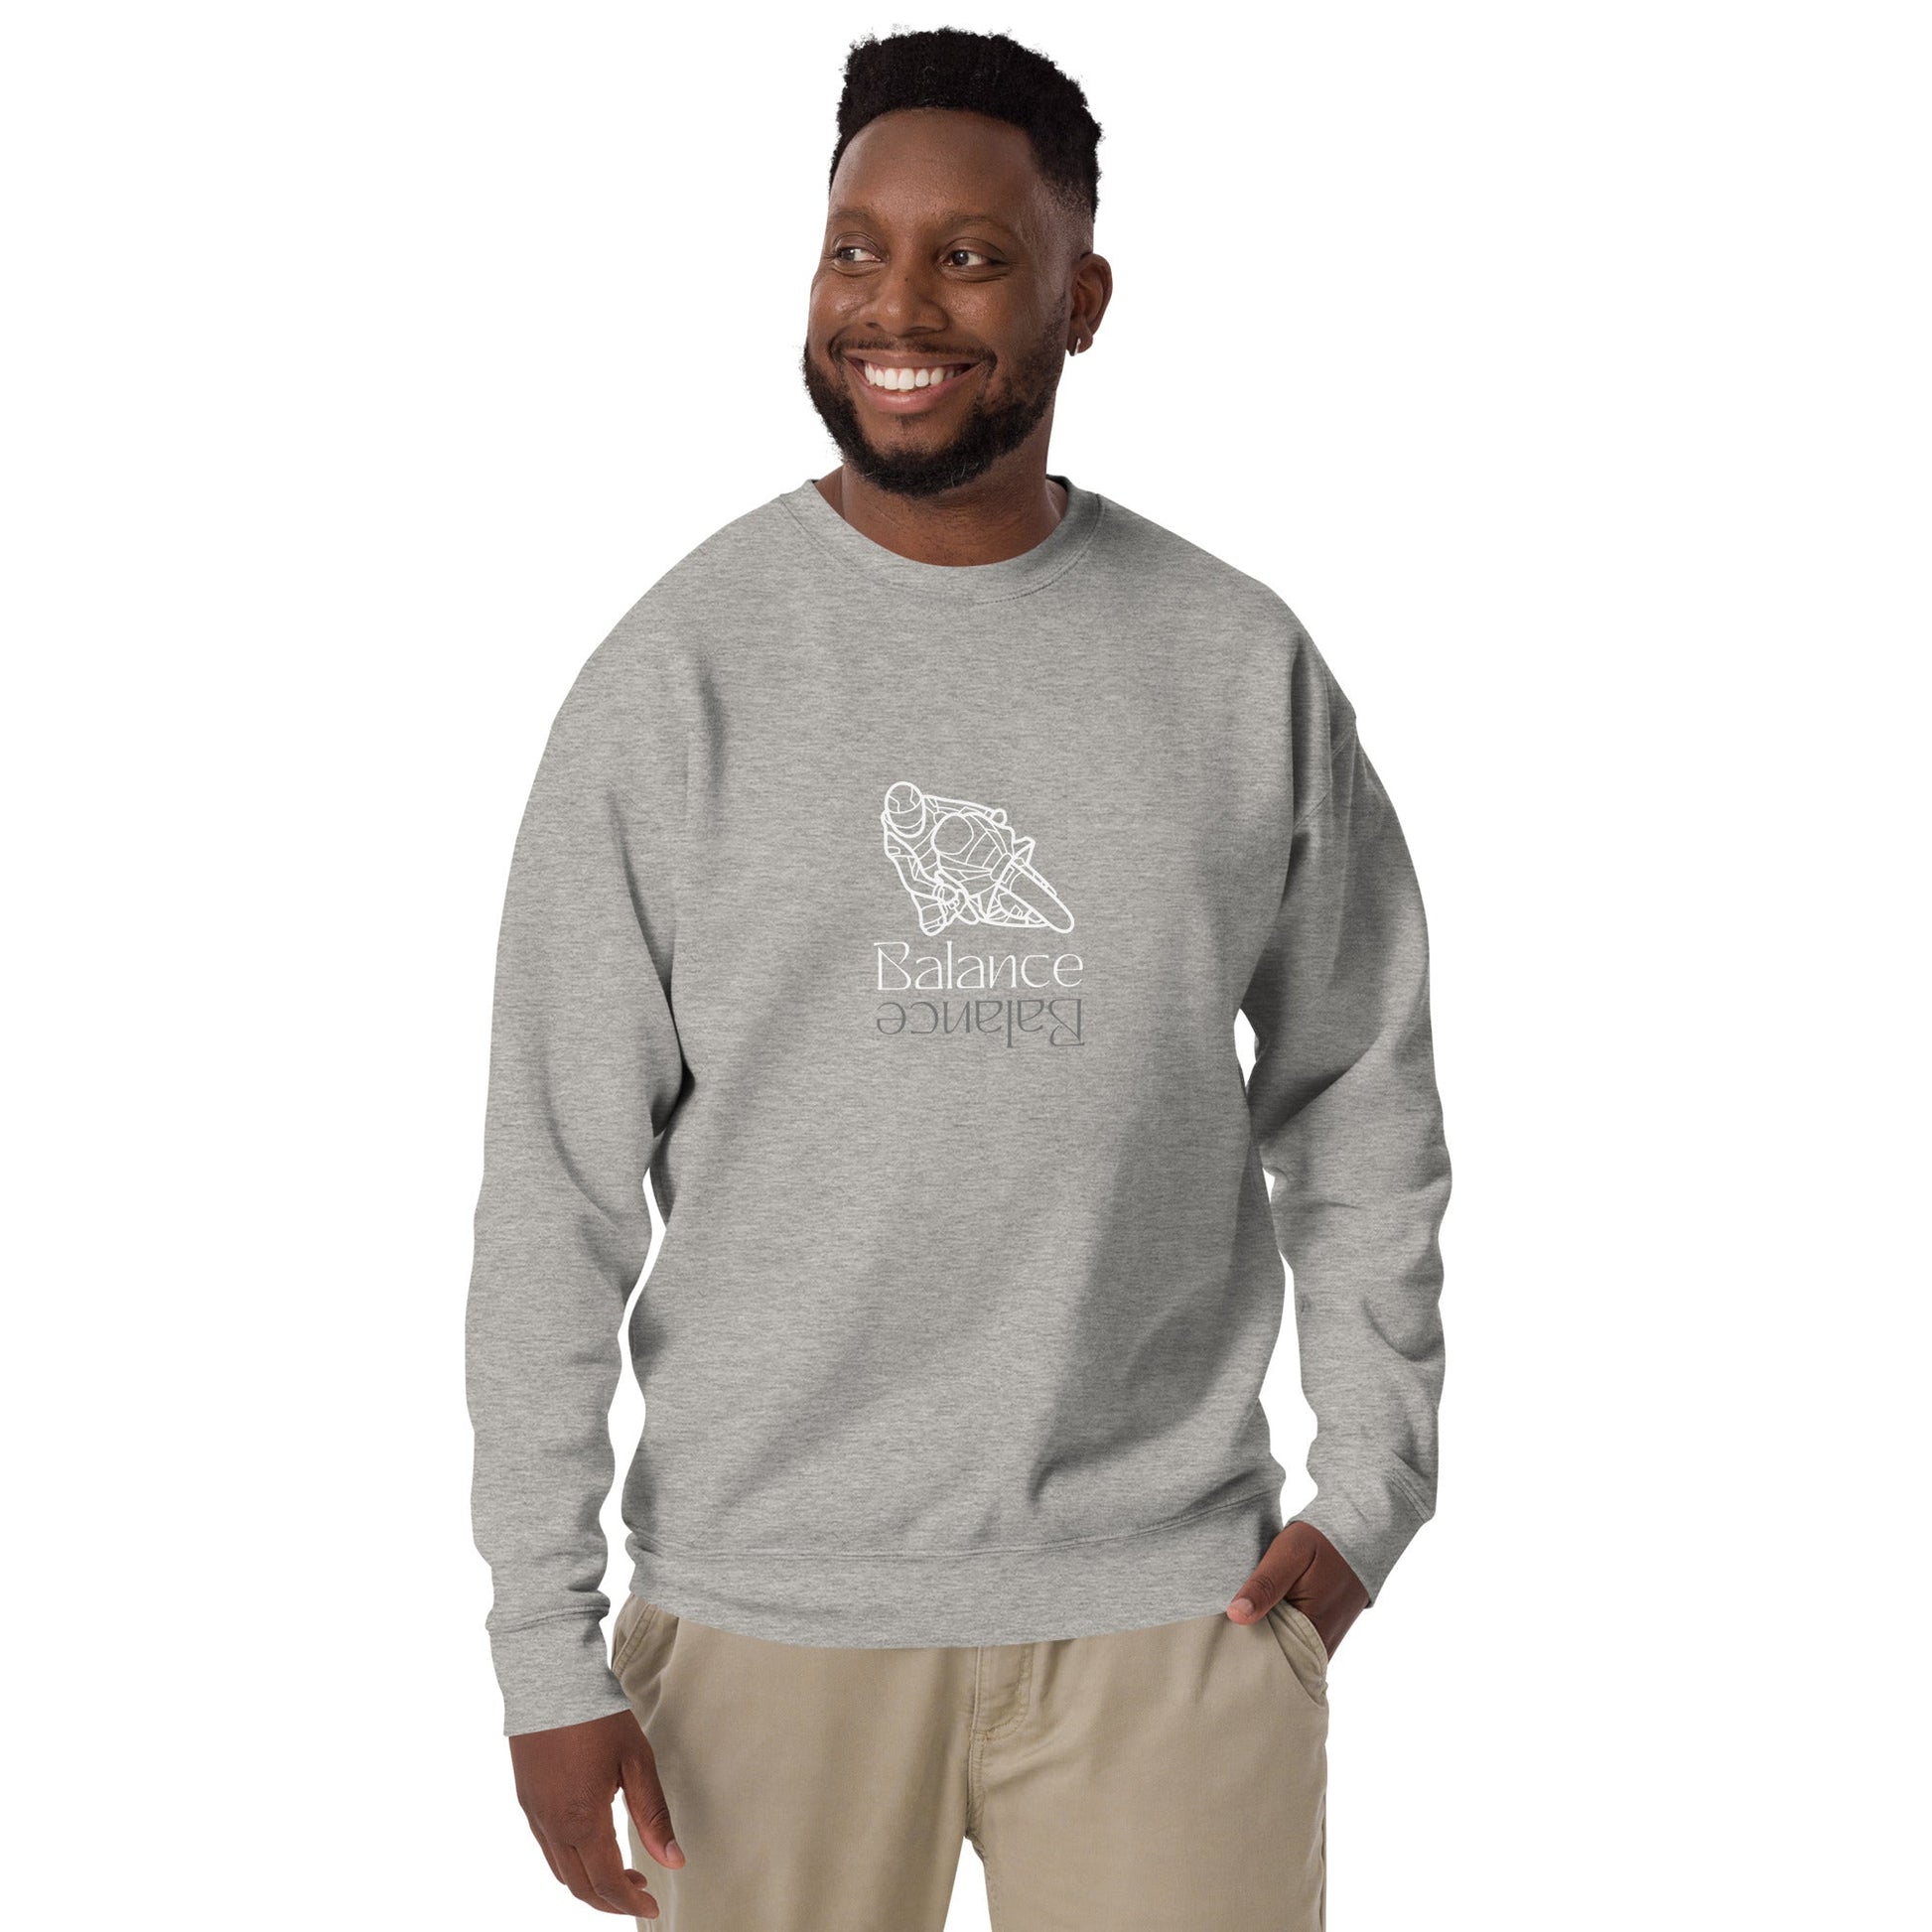 Unisex Premium Sweatshirt - Balance - The Vandi Company